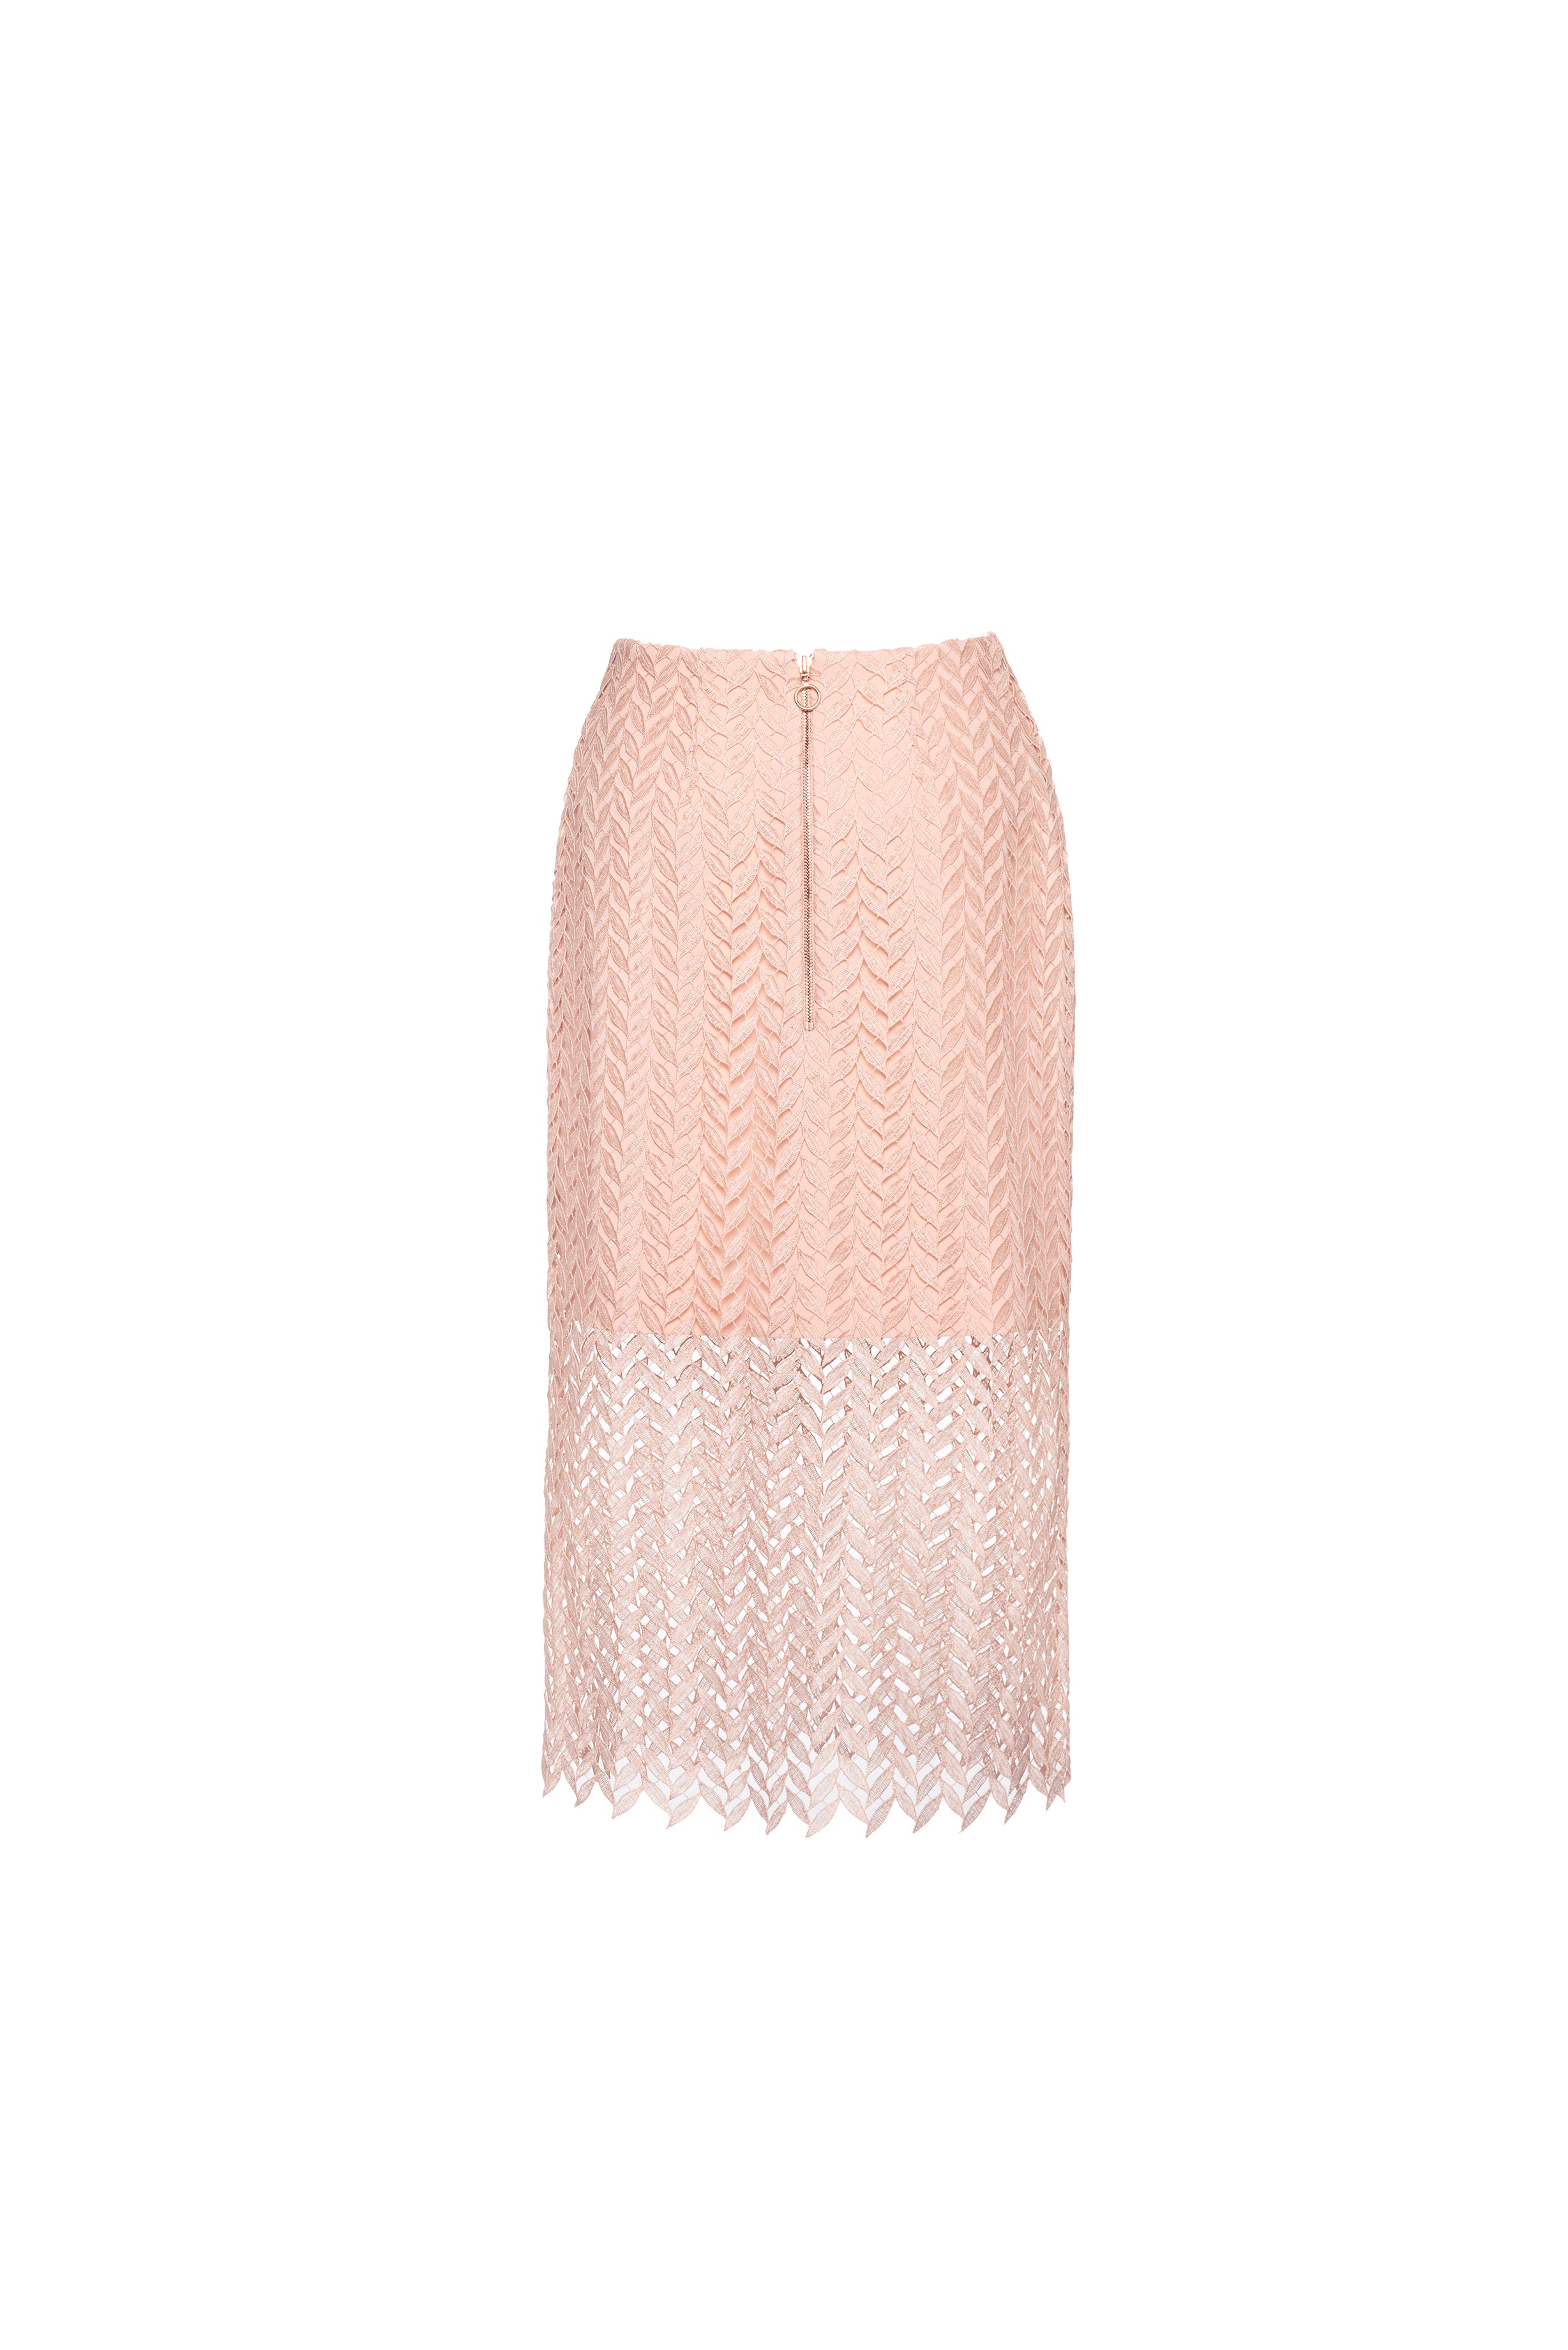 Horizon Skirt blush